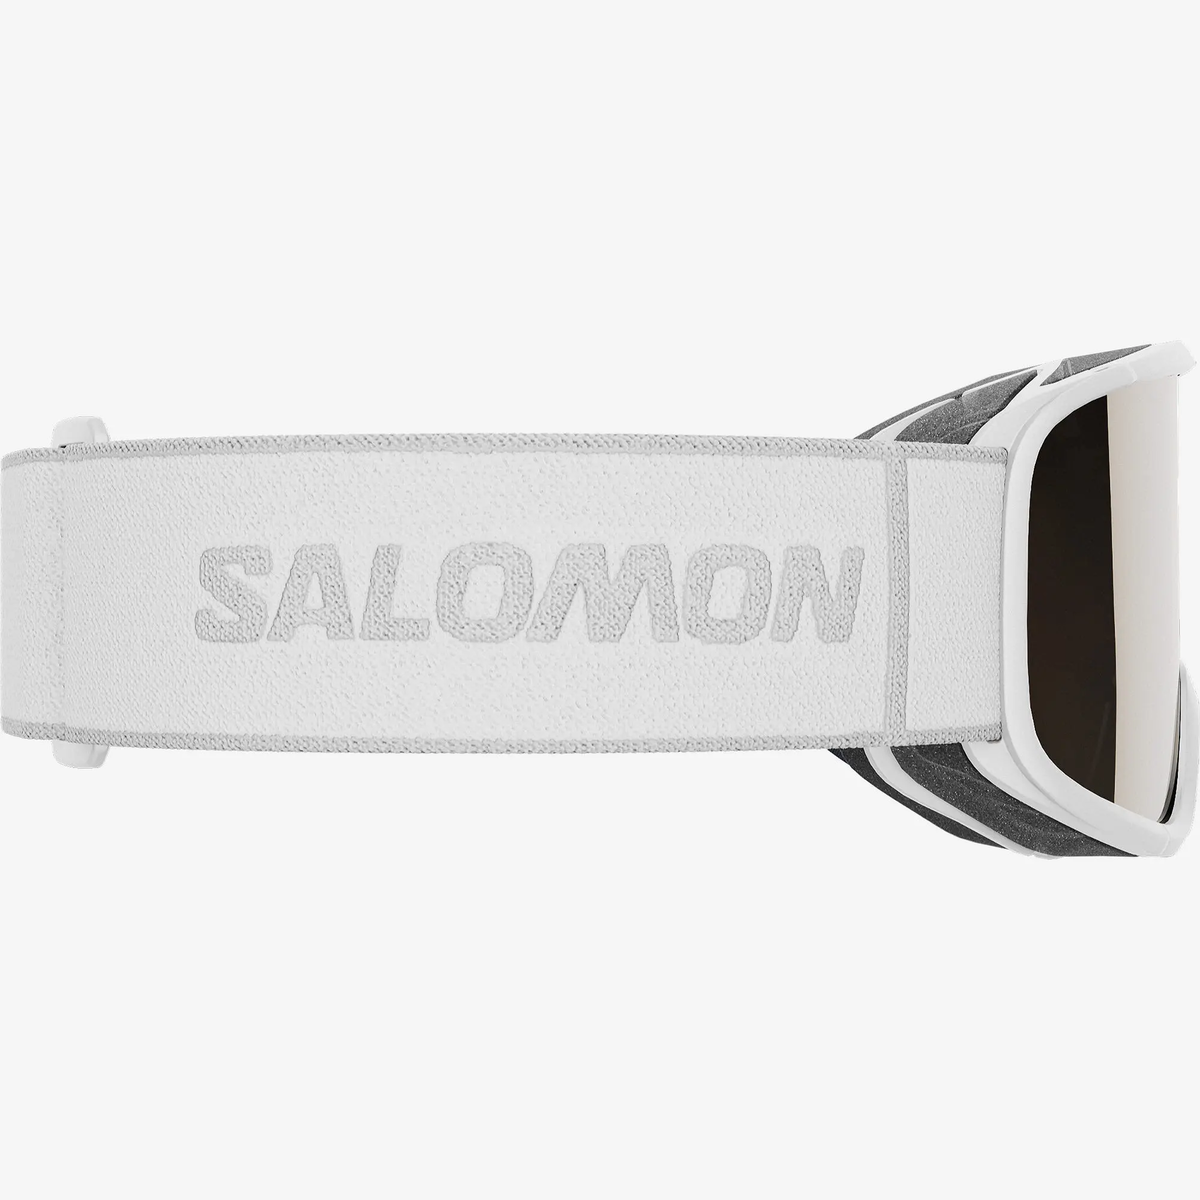 Lyžařské brýle Salomon AKSIUM 2.0 S ACCESS - WHITE - gold, one